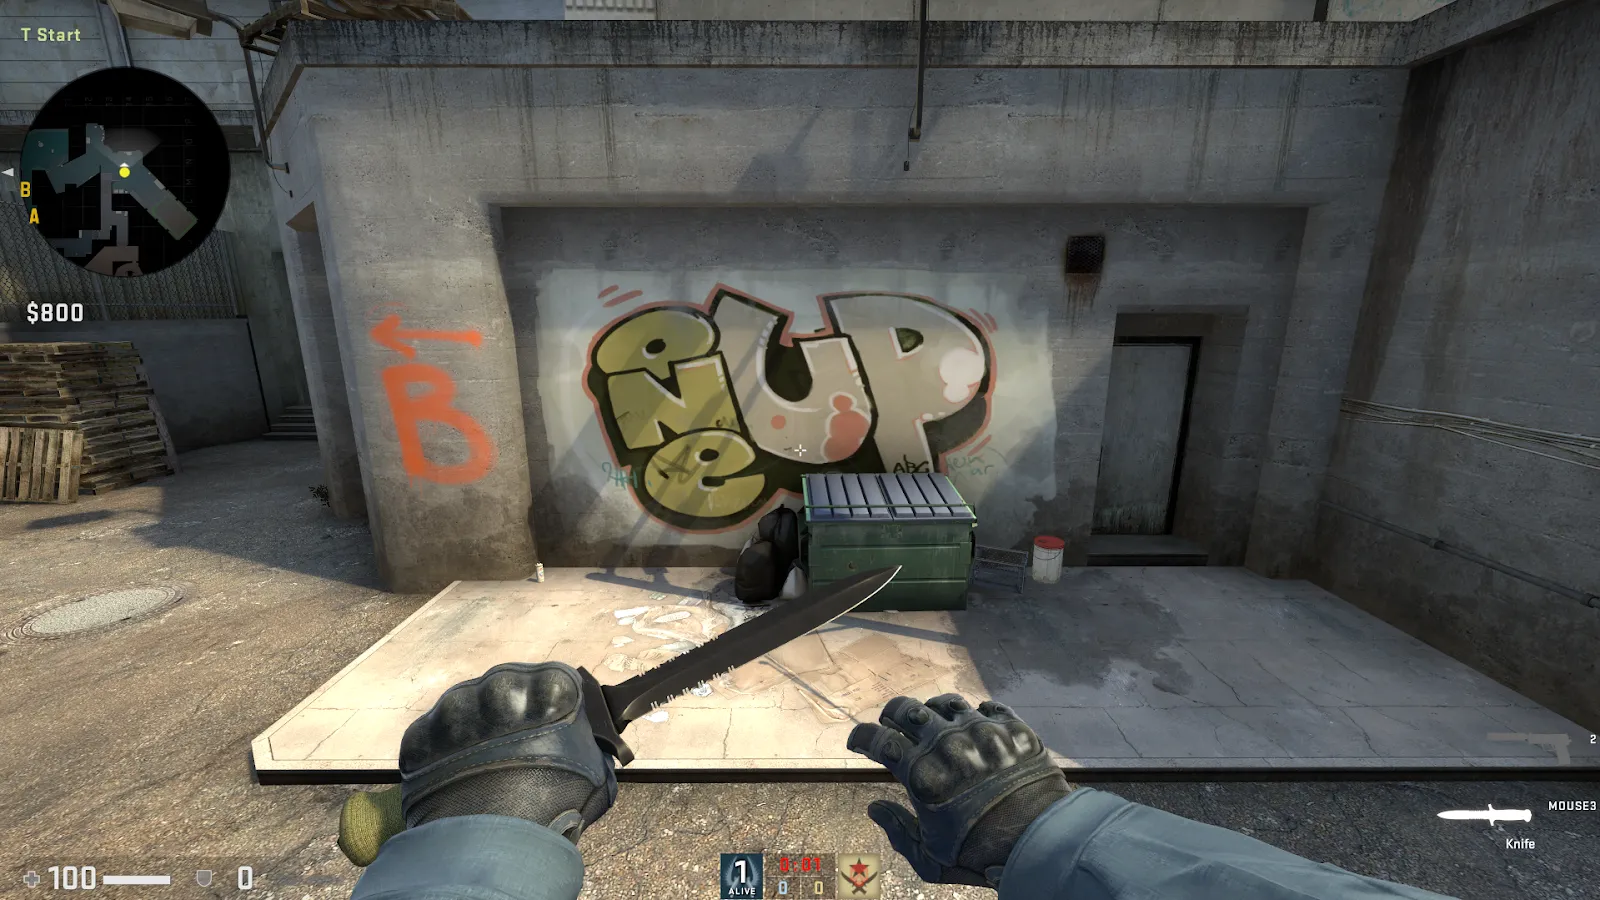 ONEUP graffiti in-game